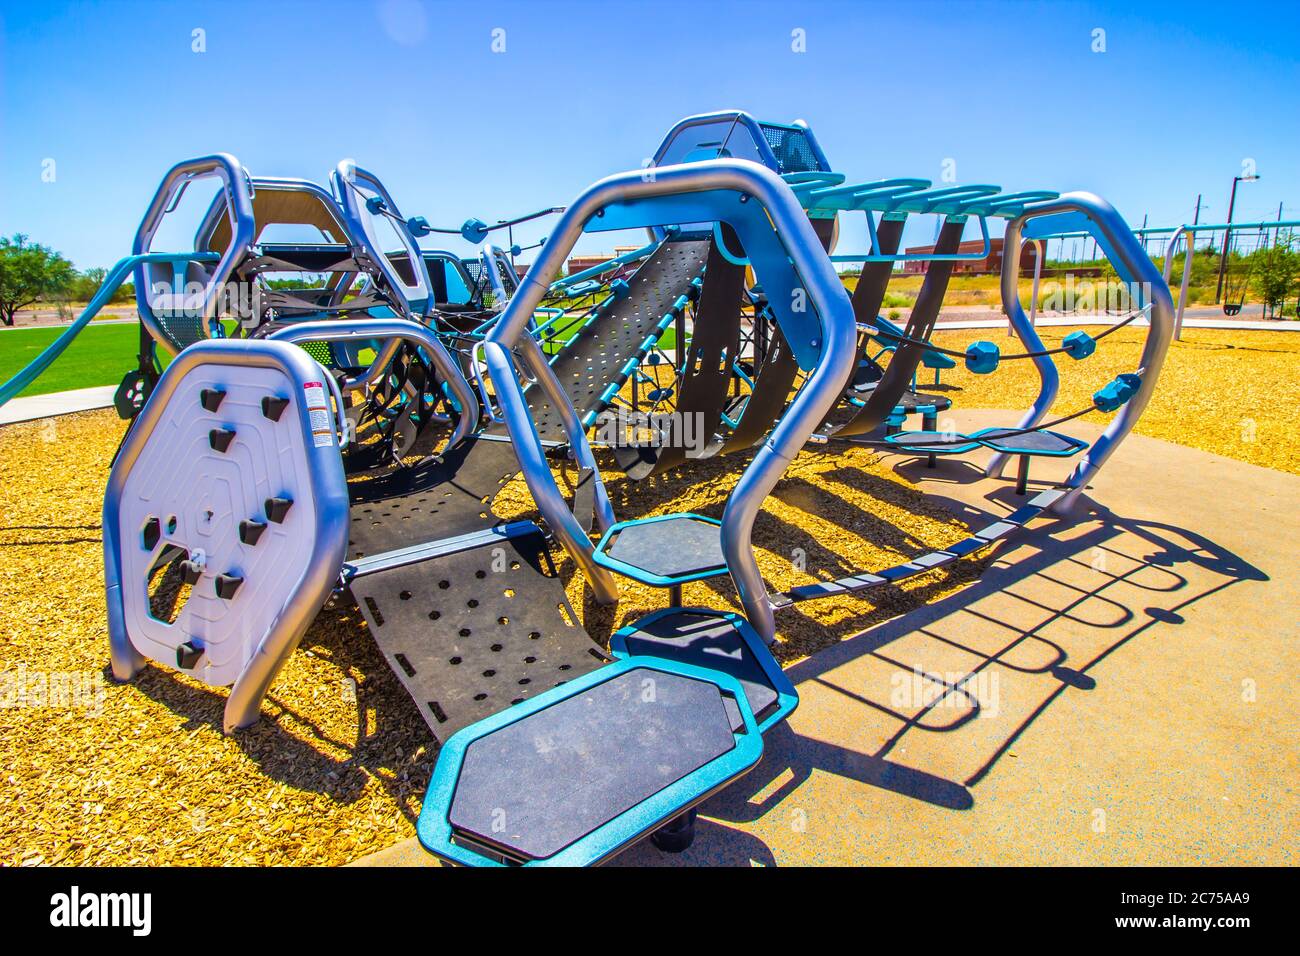 Kid's Climbing Playground Equipment At Free Public Park Stock Photo - Alamy